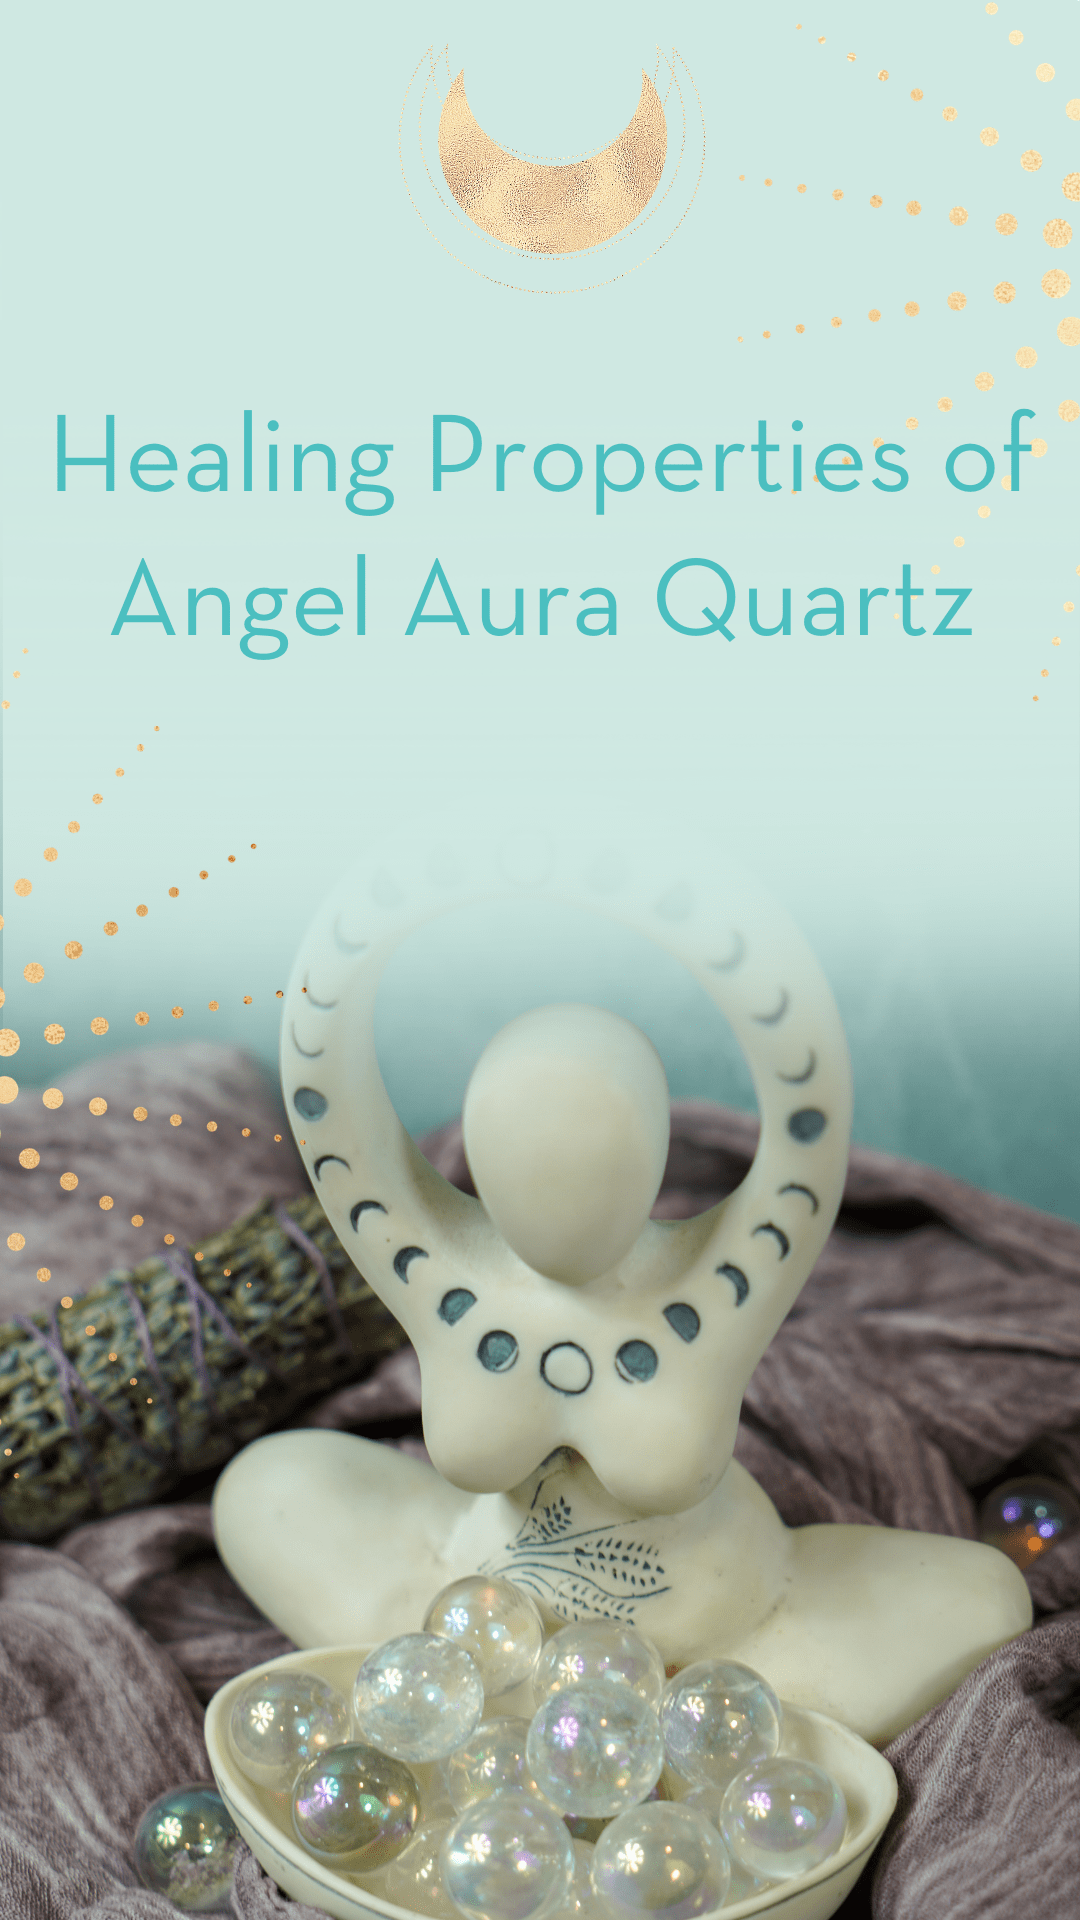 Healing Properties of Angel Aura Quartz